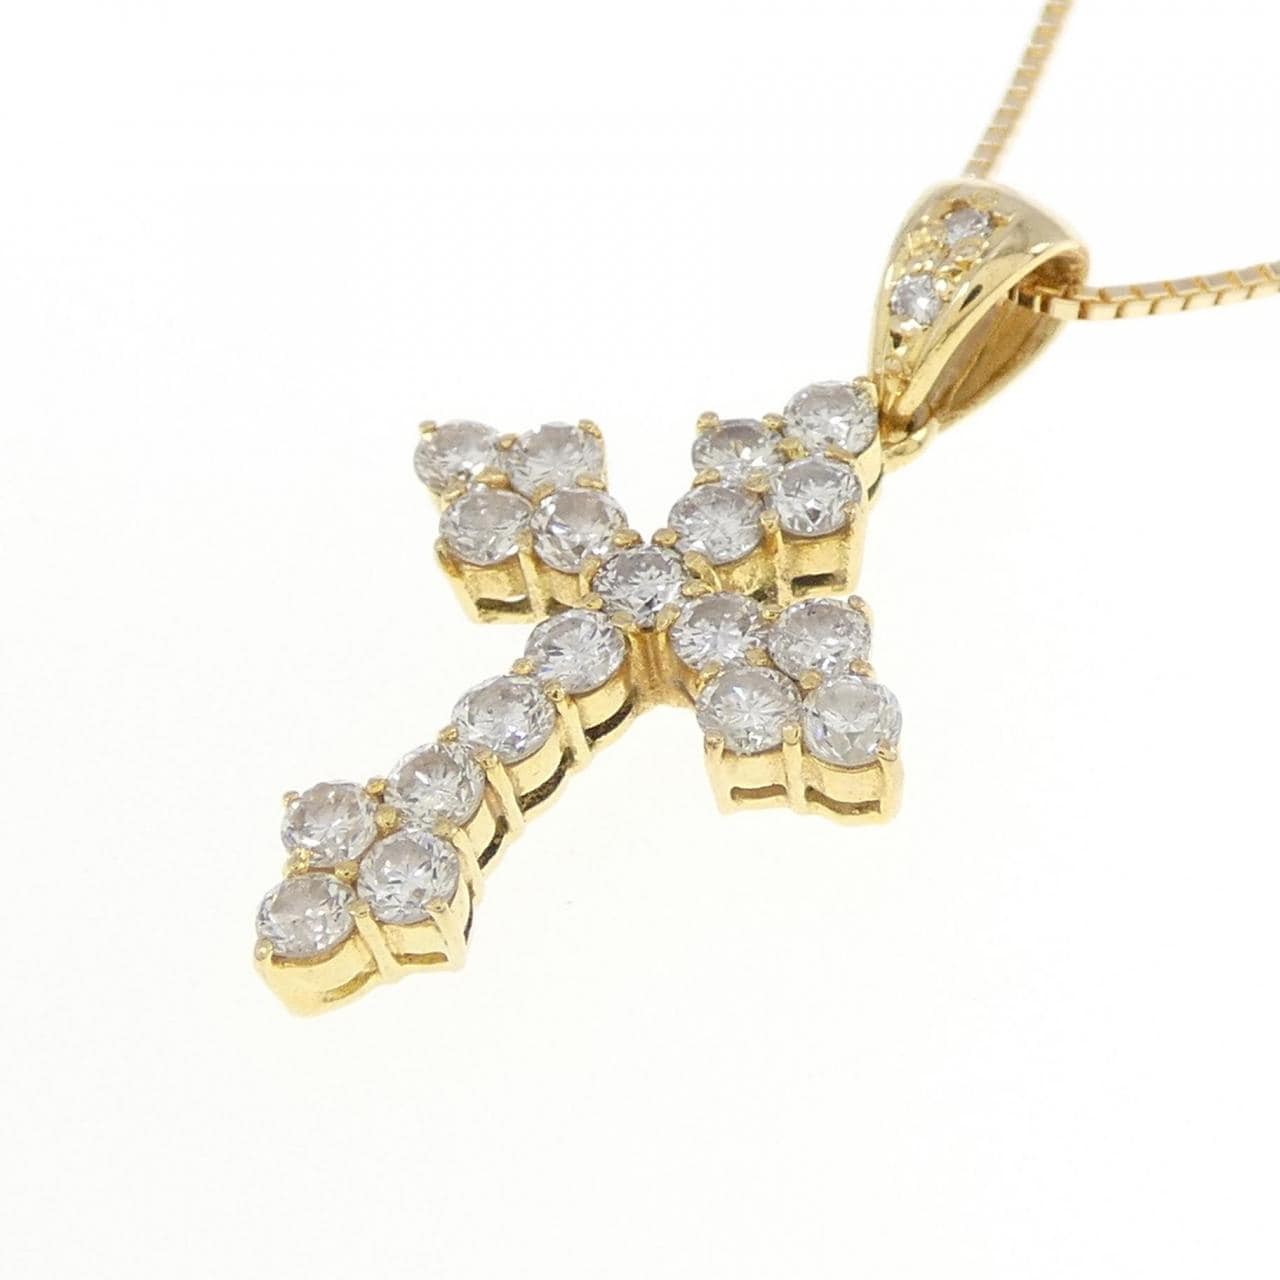 K18YG cross Diamond necklace 0.59CT